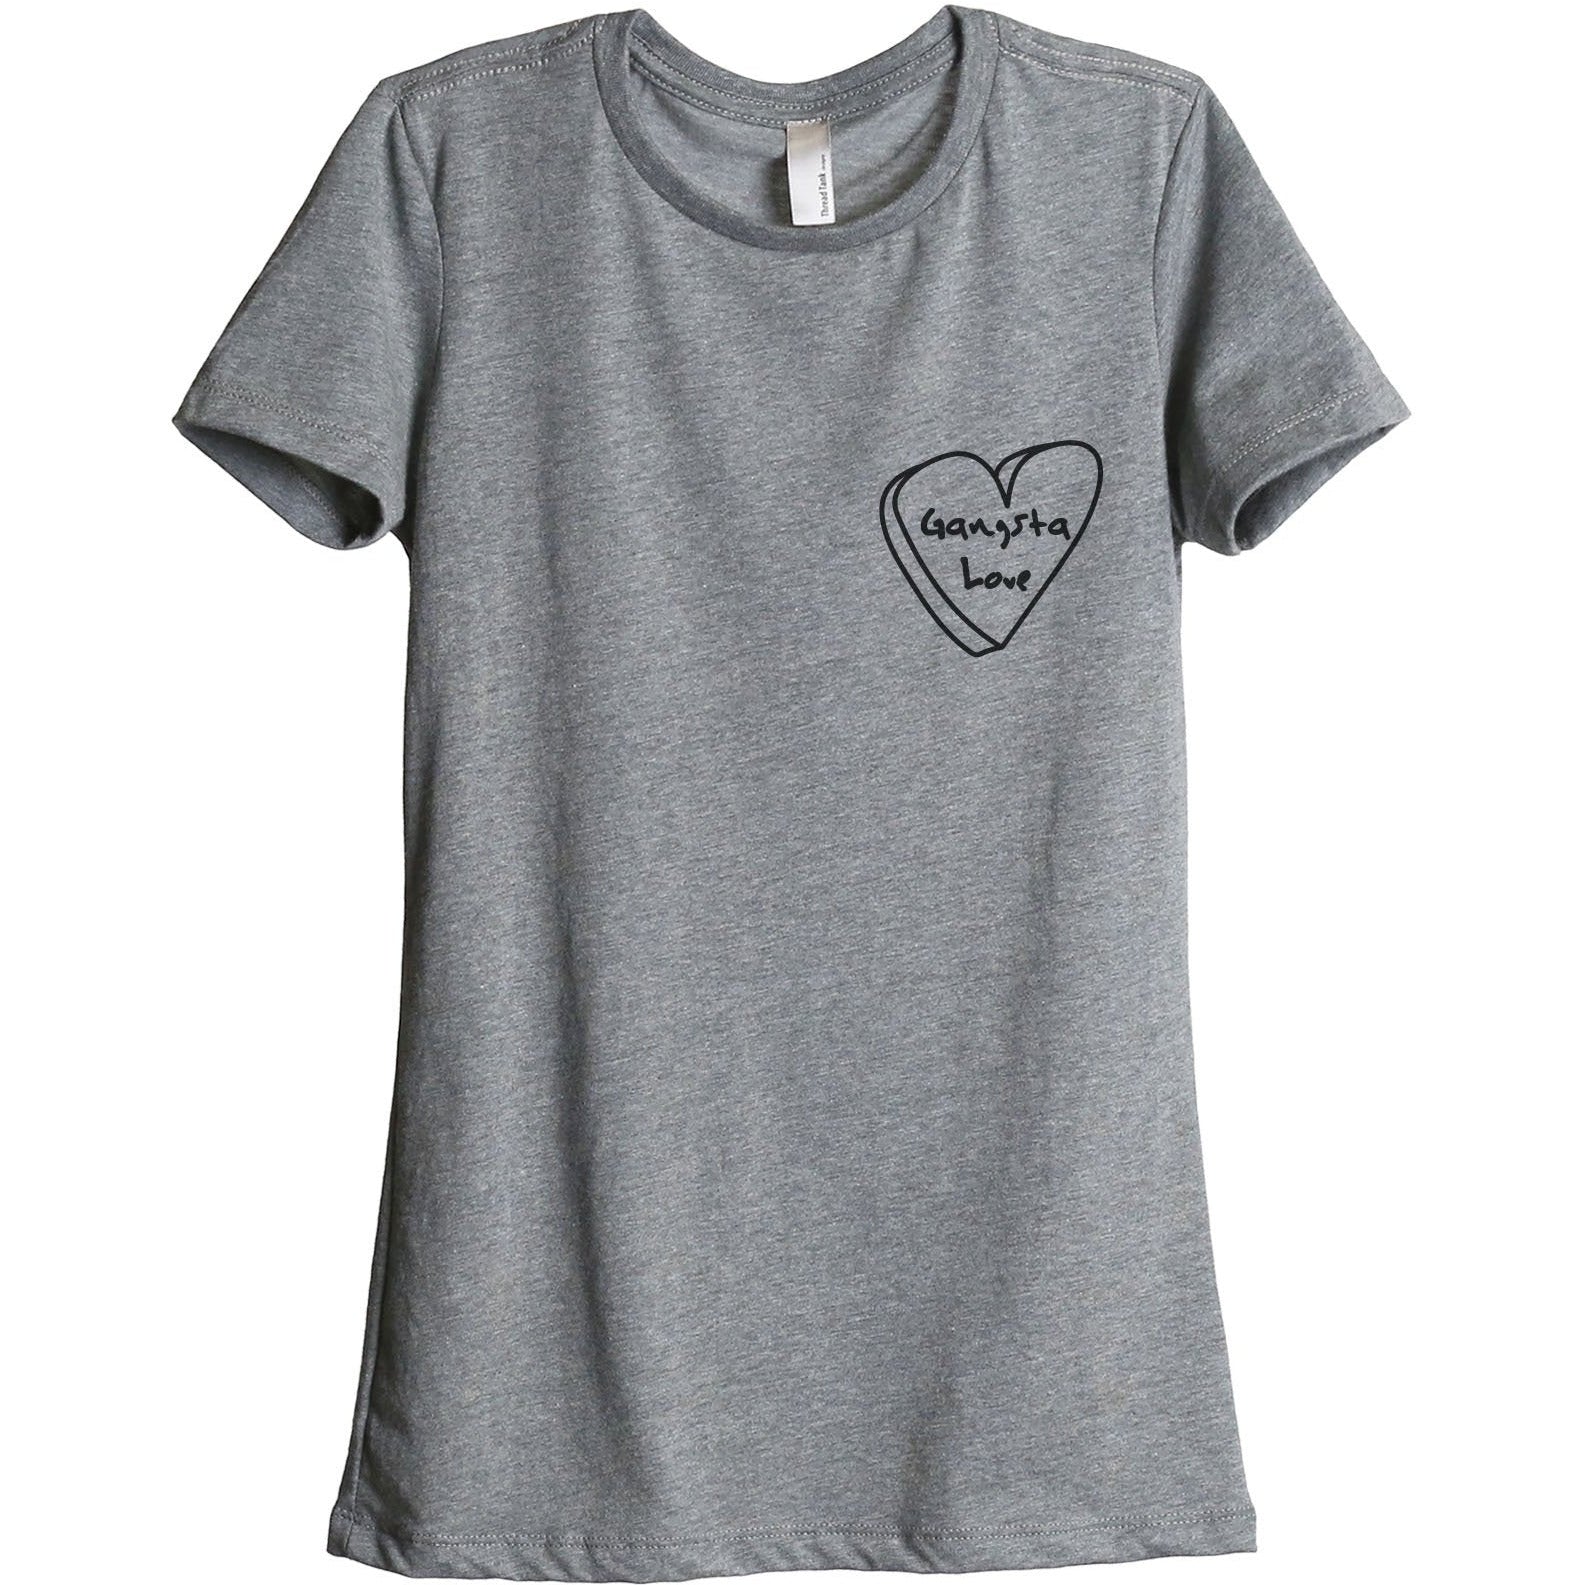 Gangsta Love - Thread Tank | Stories You Can Wear | T-Shirts, Tank Tops and Sweatshirts